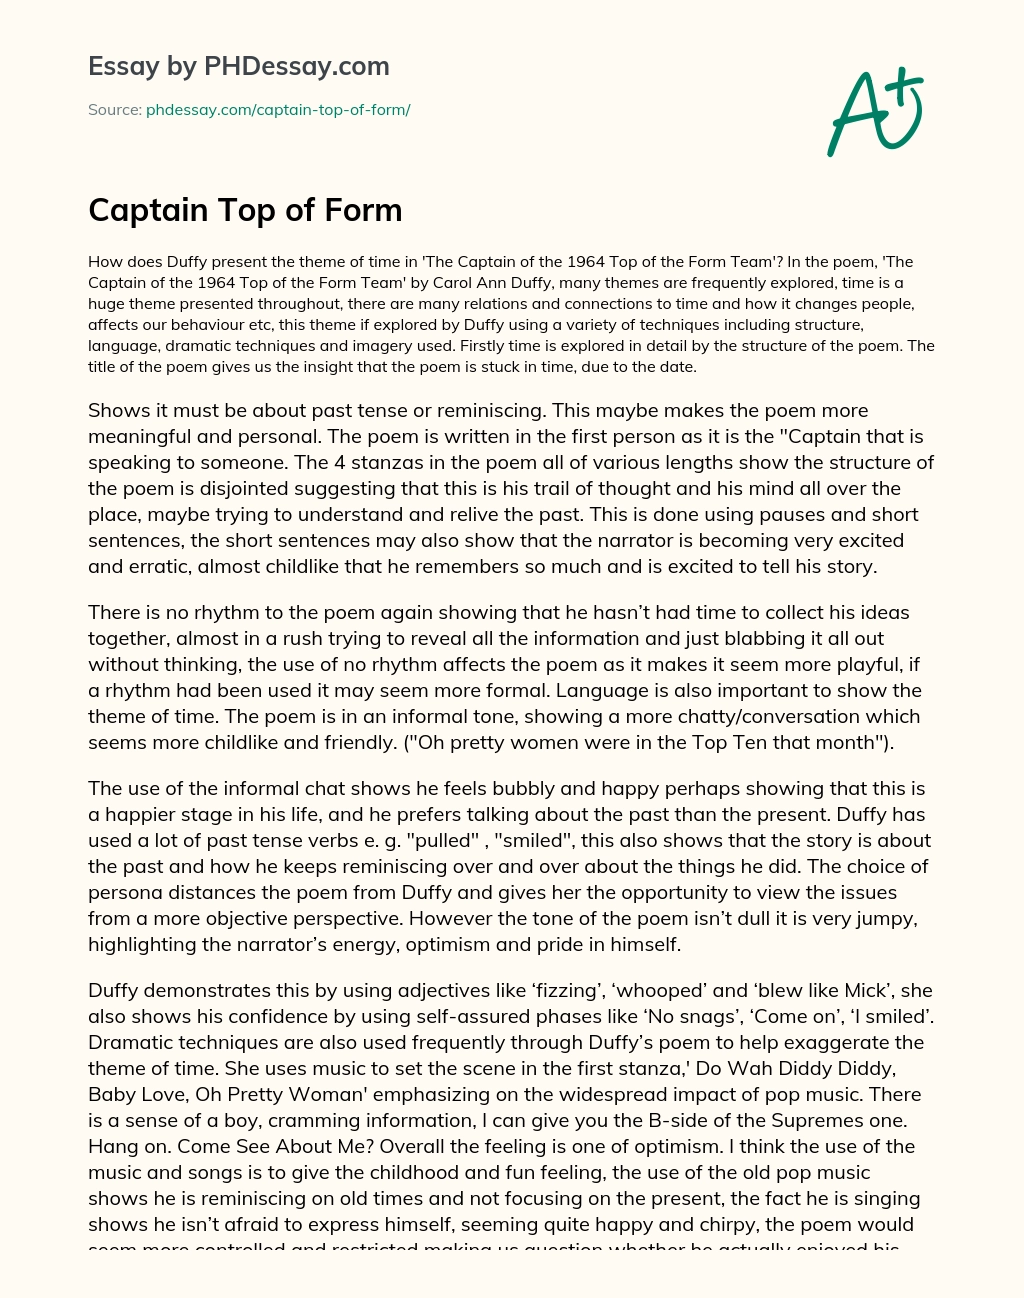 Captain Top of Form essay